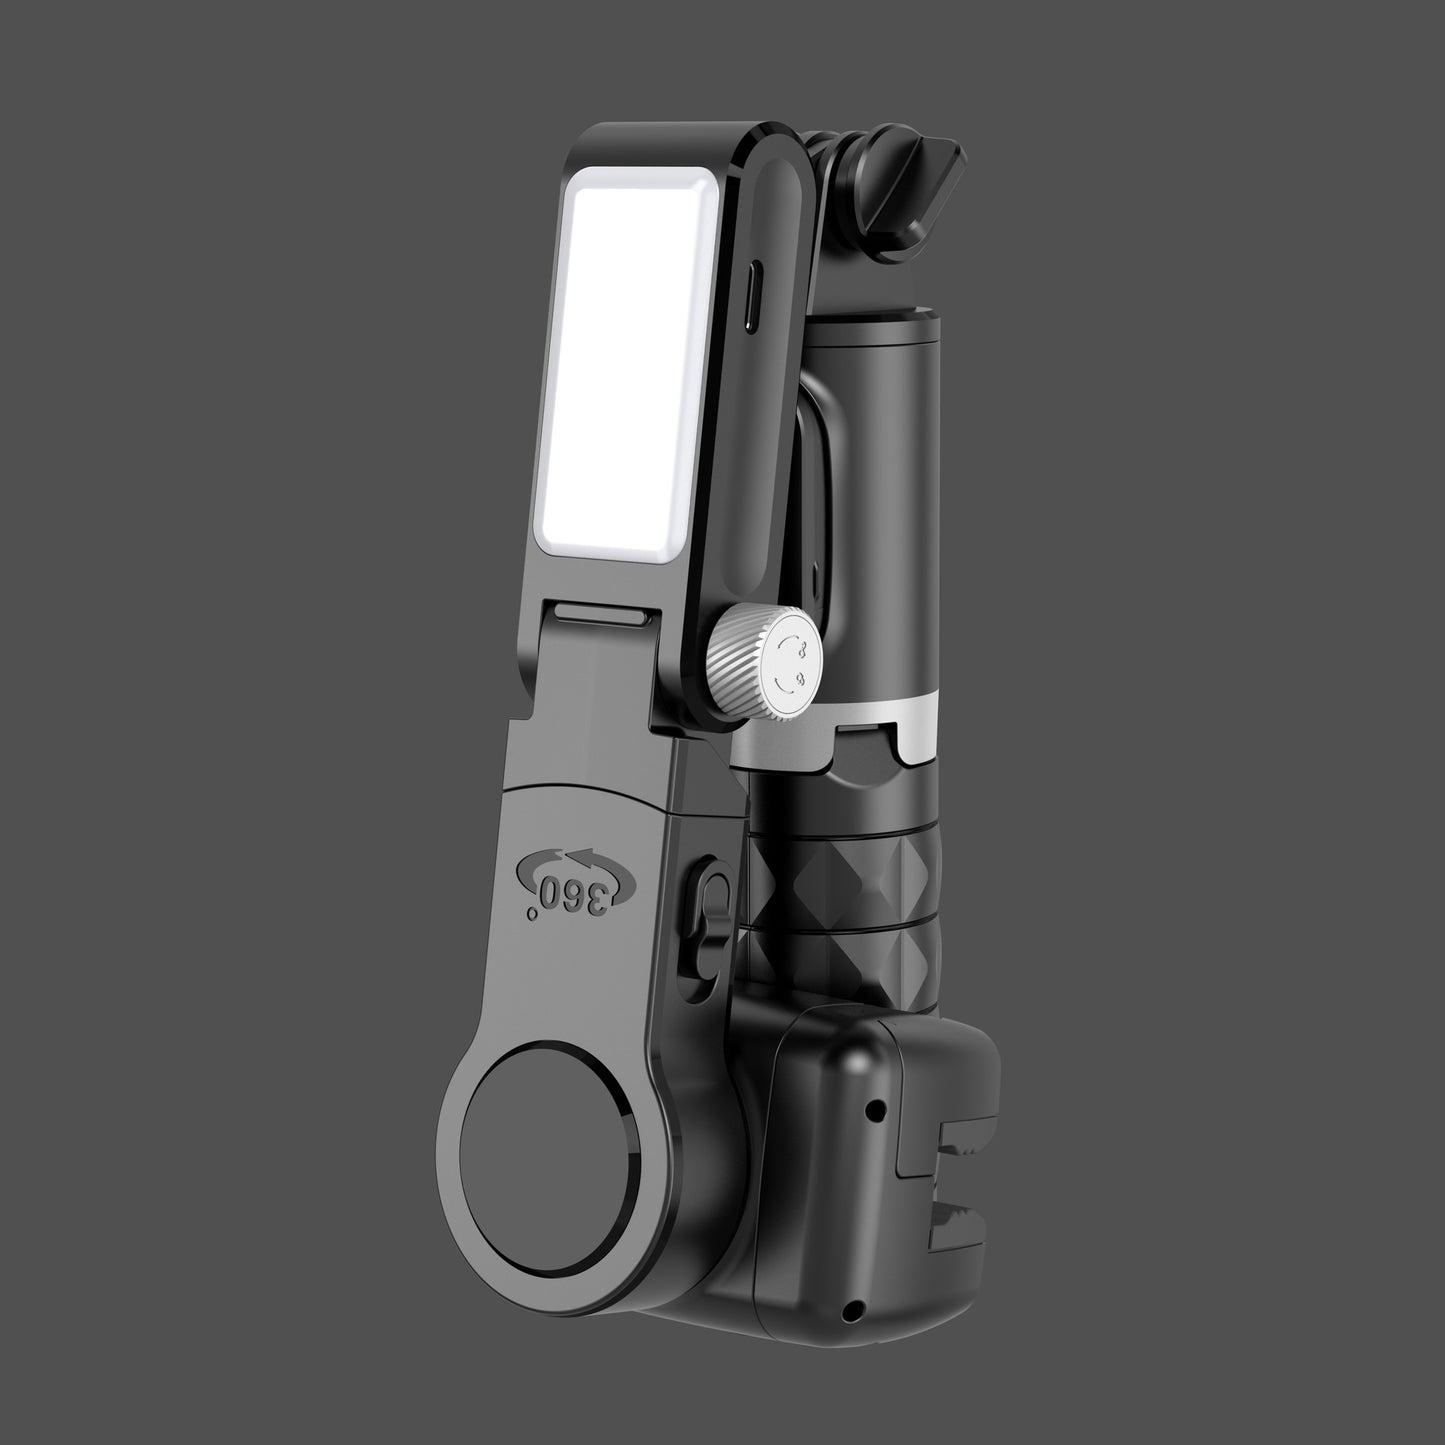 Selfie Stick Gimbal Smartphone Stabilizer with 360° Tripod